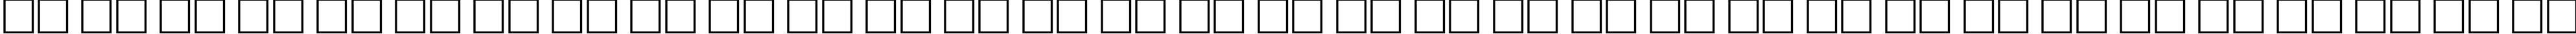 Пример написания русского алфавита шрифтом Aardvark60n